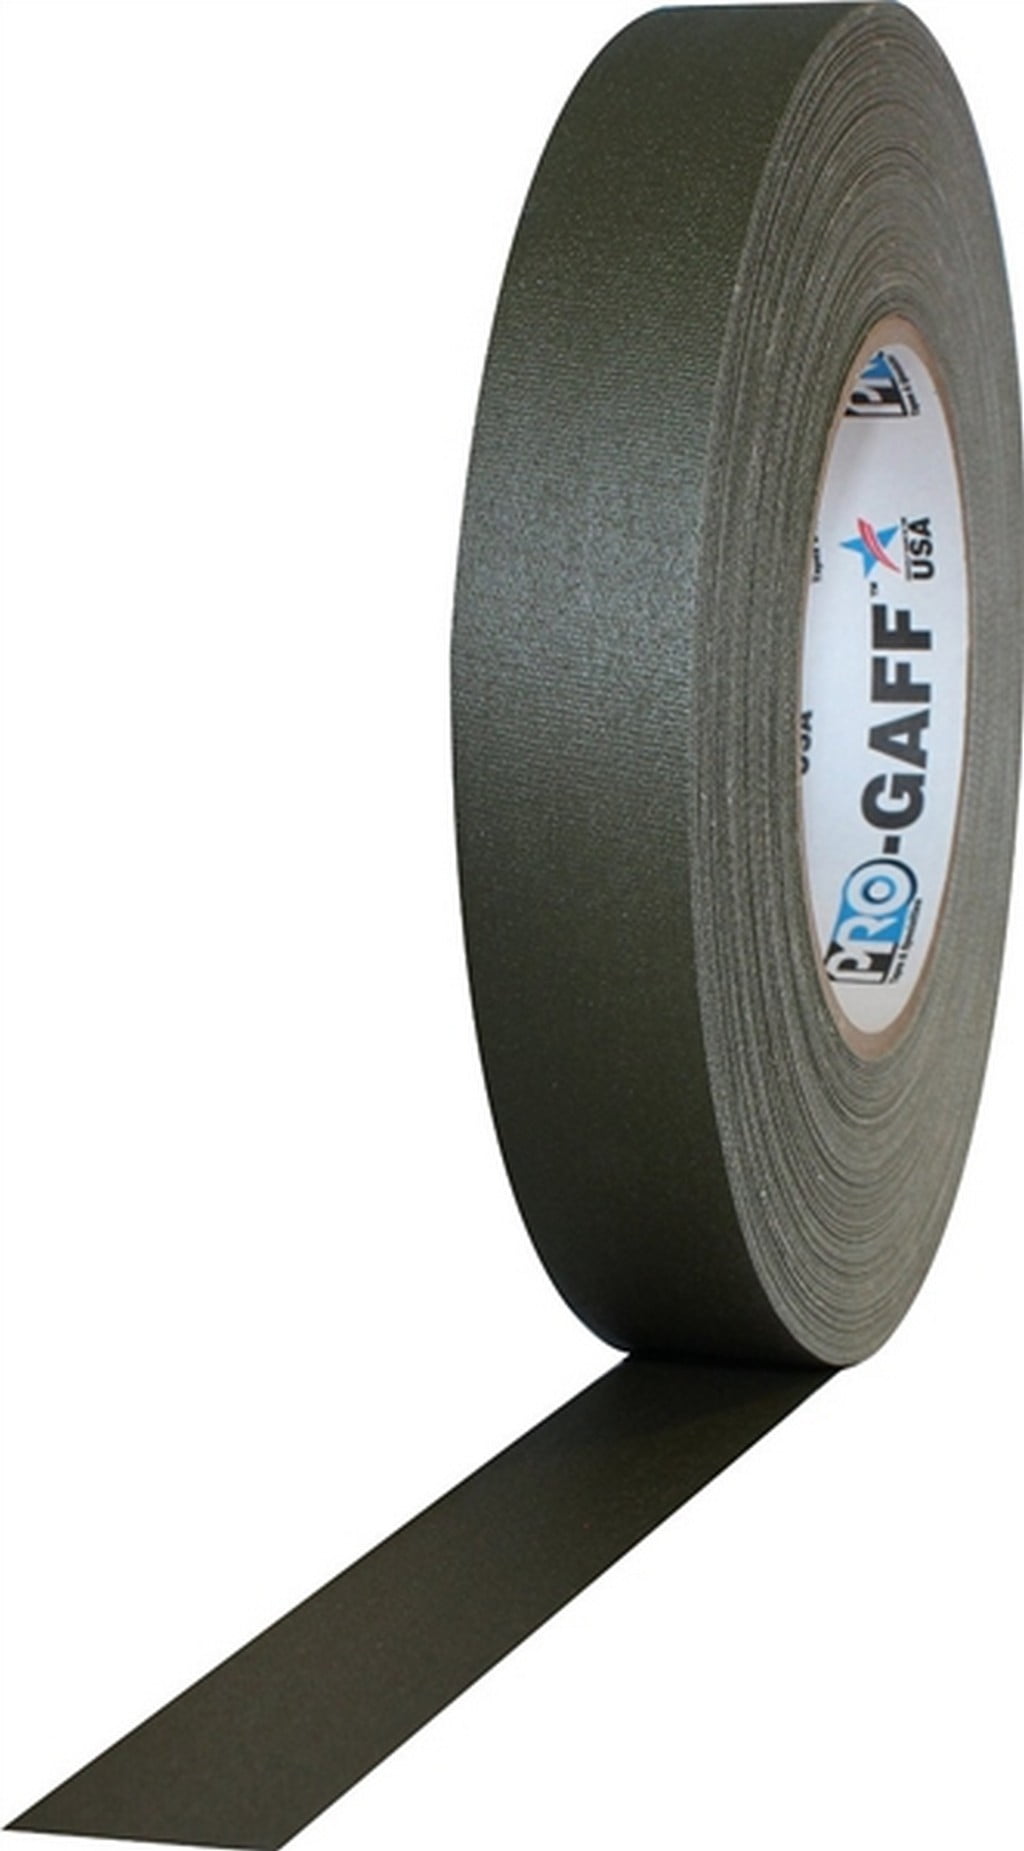 Pro Gaff Gaffers Spike Tape Olive Drab 1/2 inch x 55 yards 